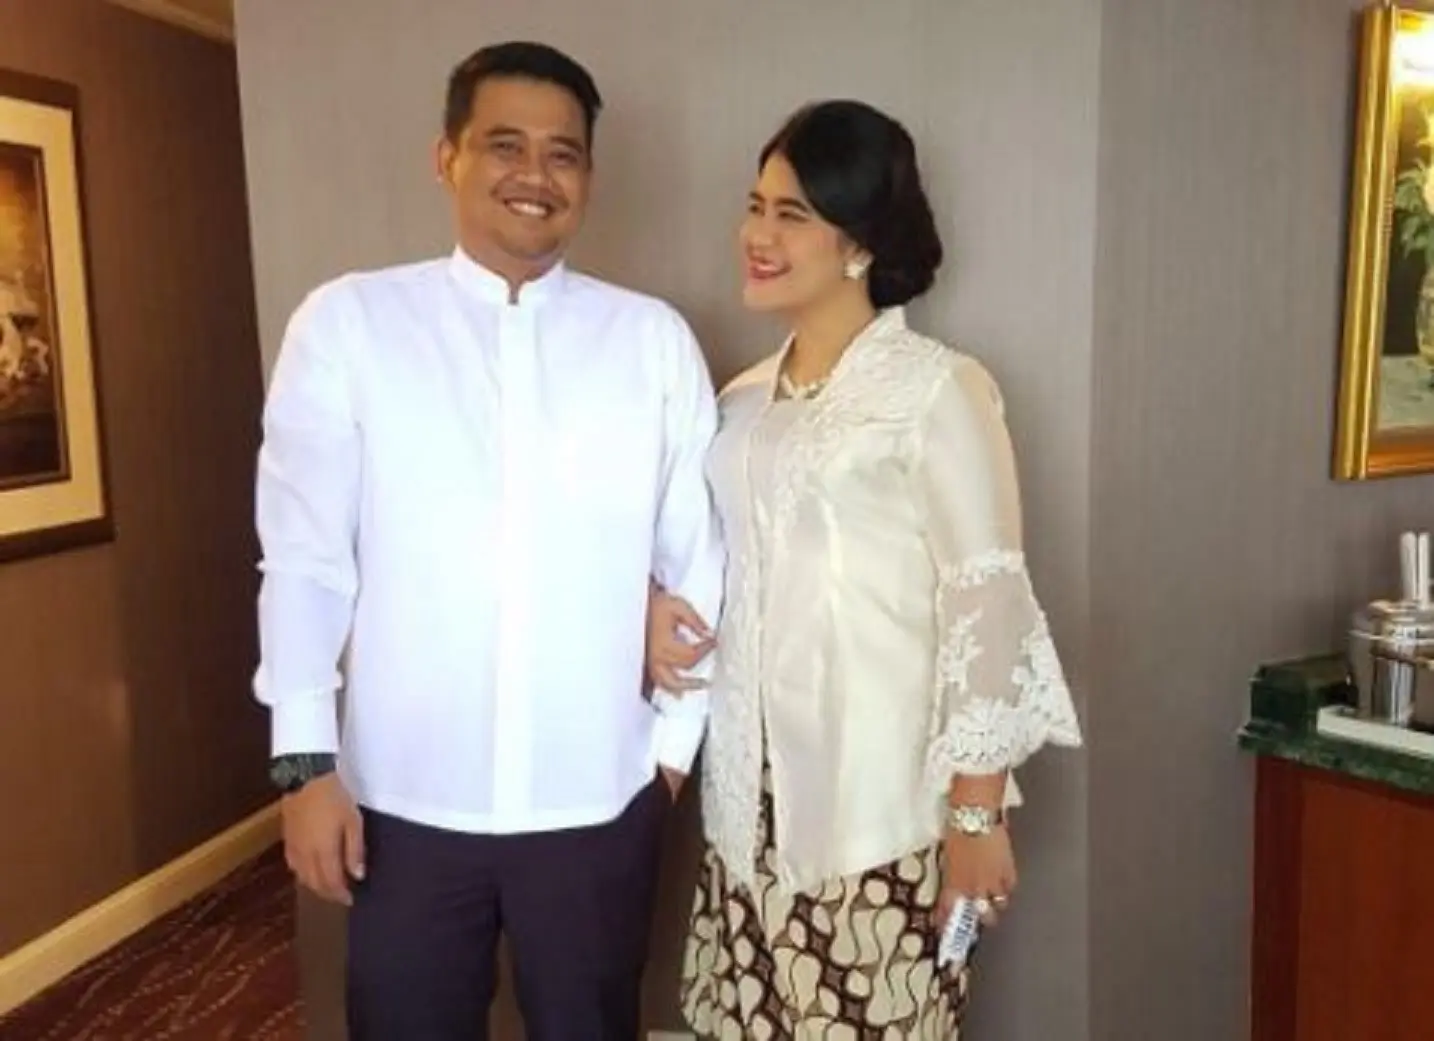 Berbaju putih dan berkain batik, Kahiyang Ayu putri Presiden Jokowi panen pujian dari warganet (Instagram/@ayanggkahiyang)